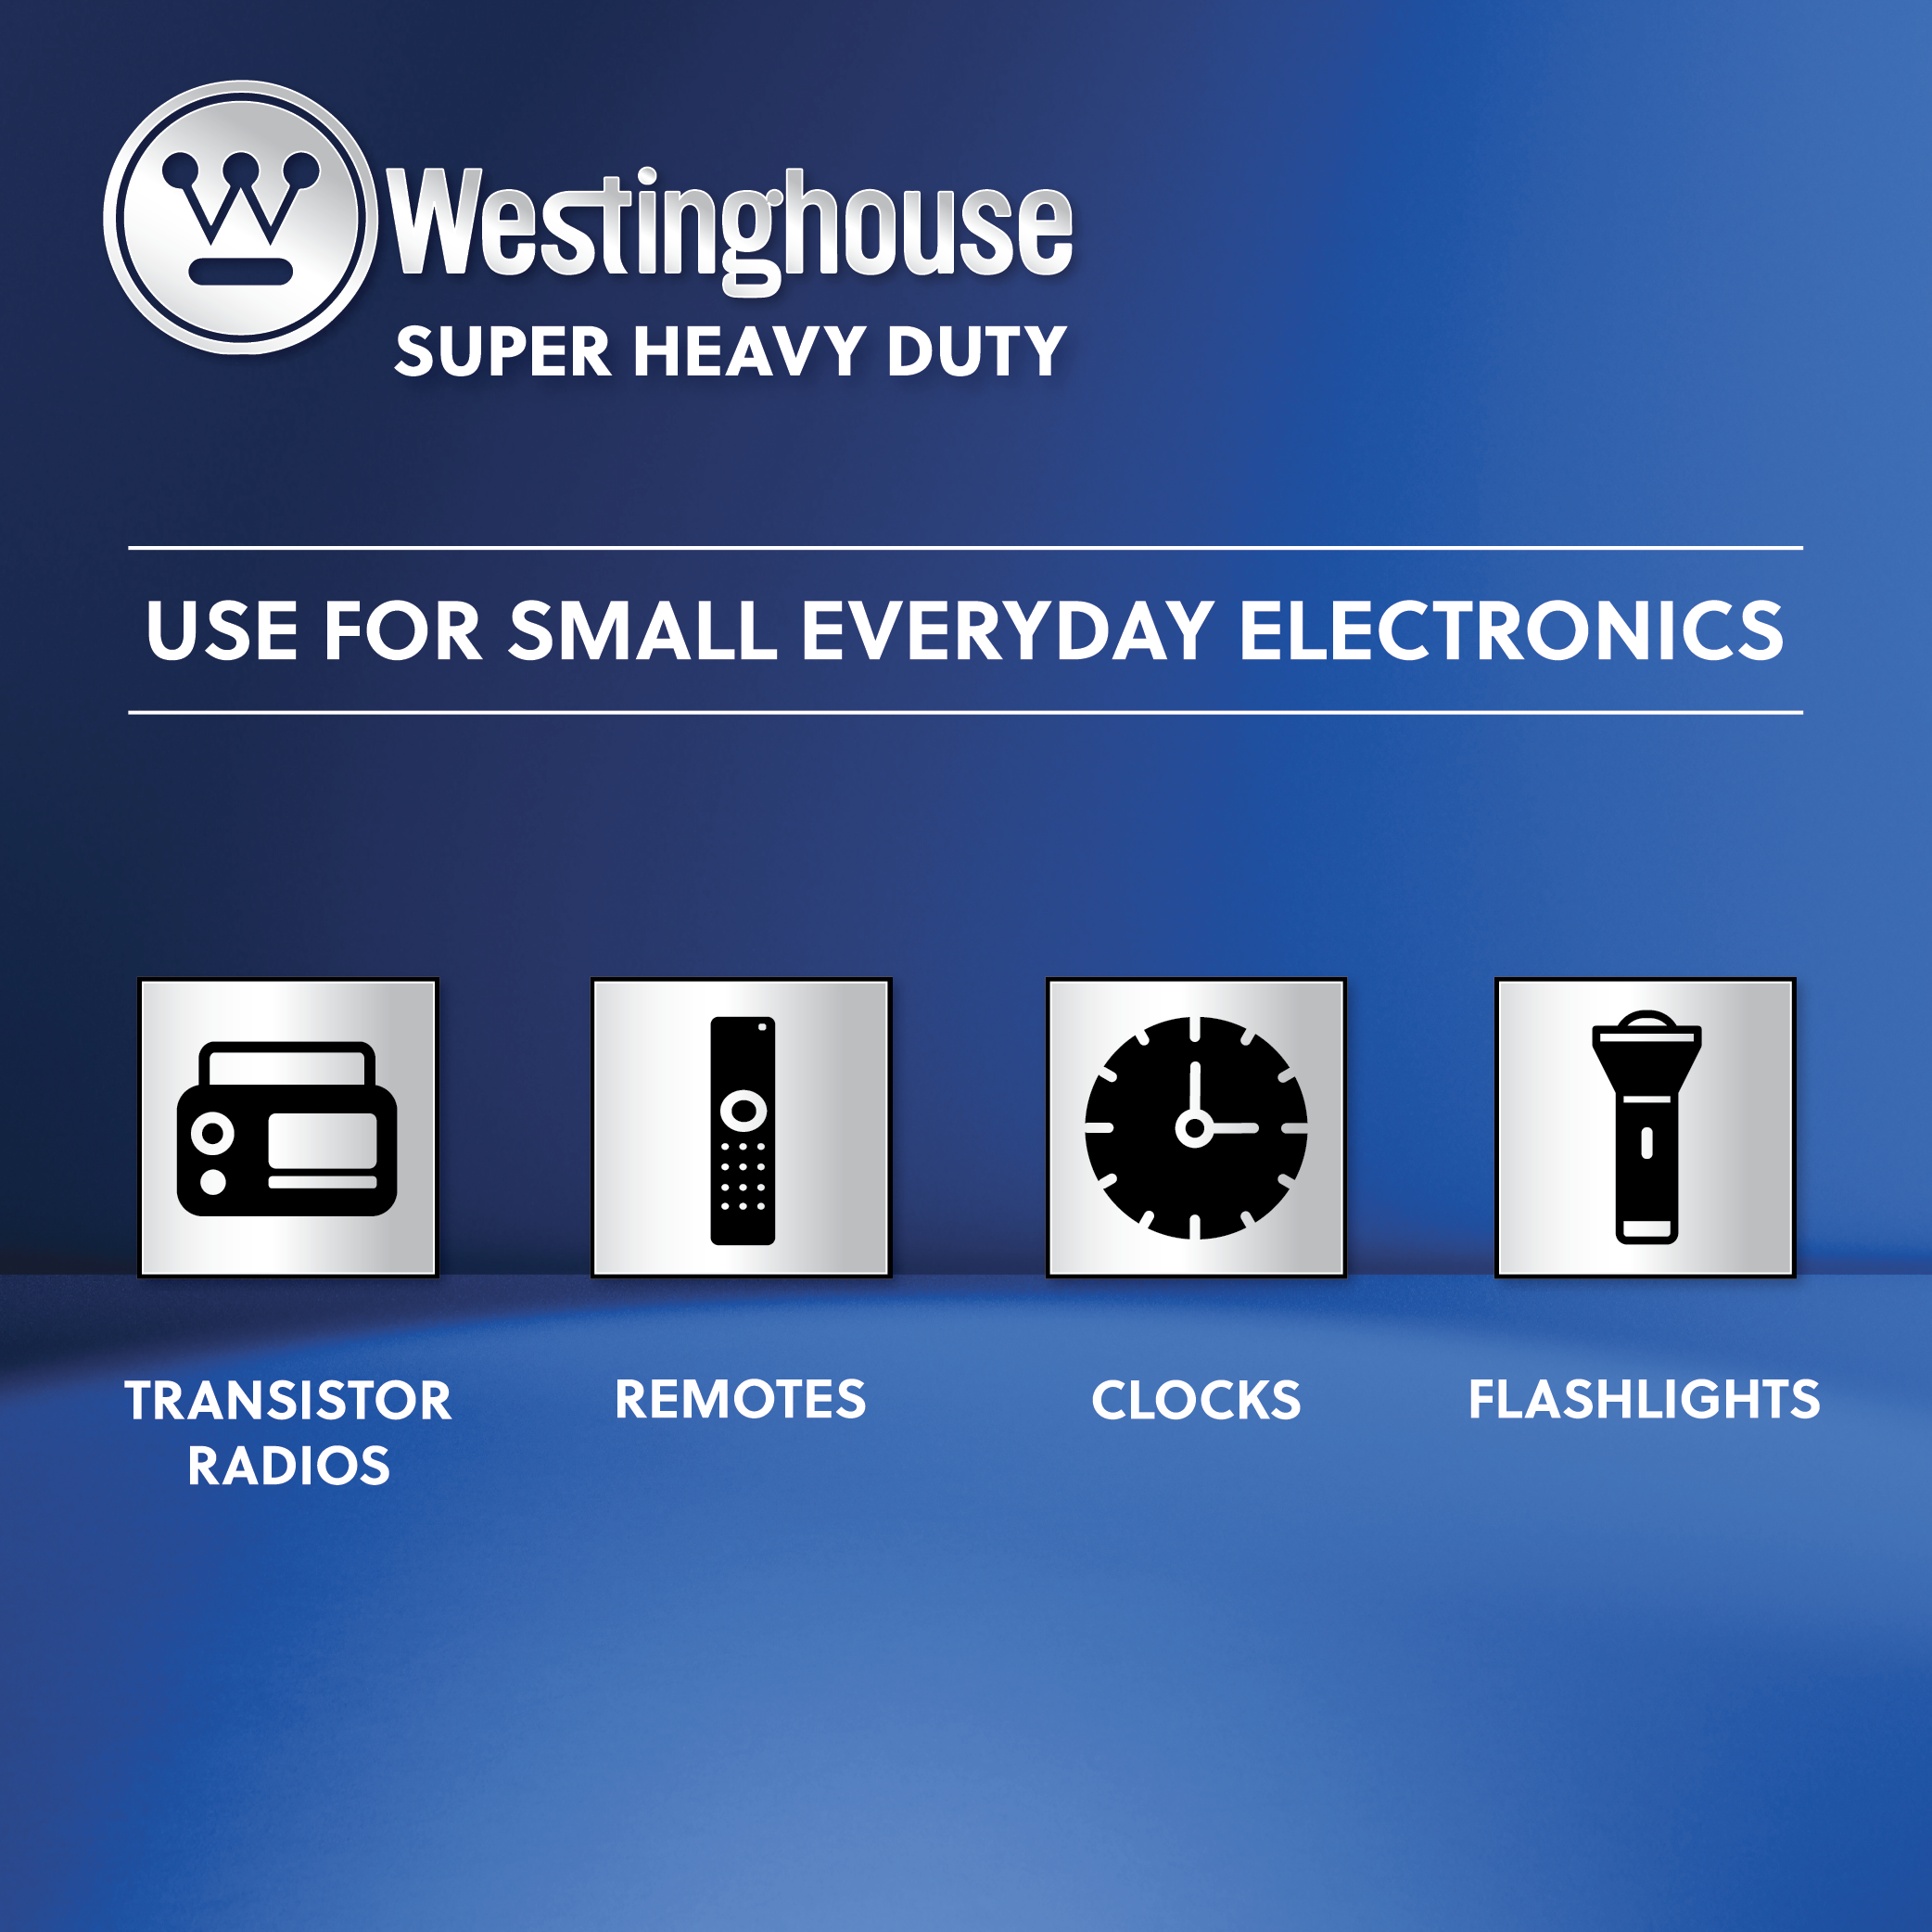 Westinghouse D Super Heavy Duty